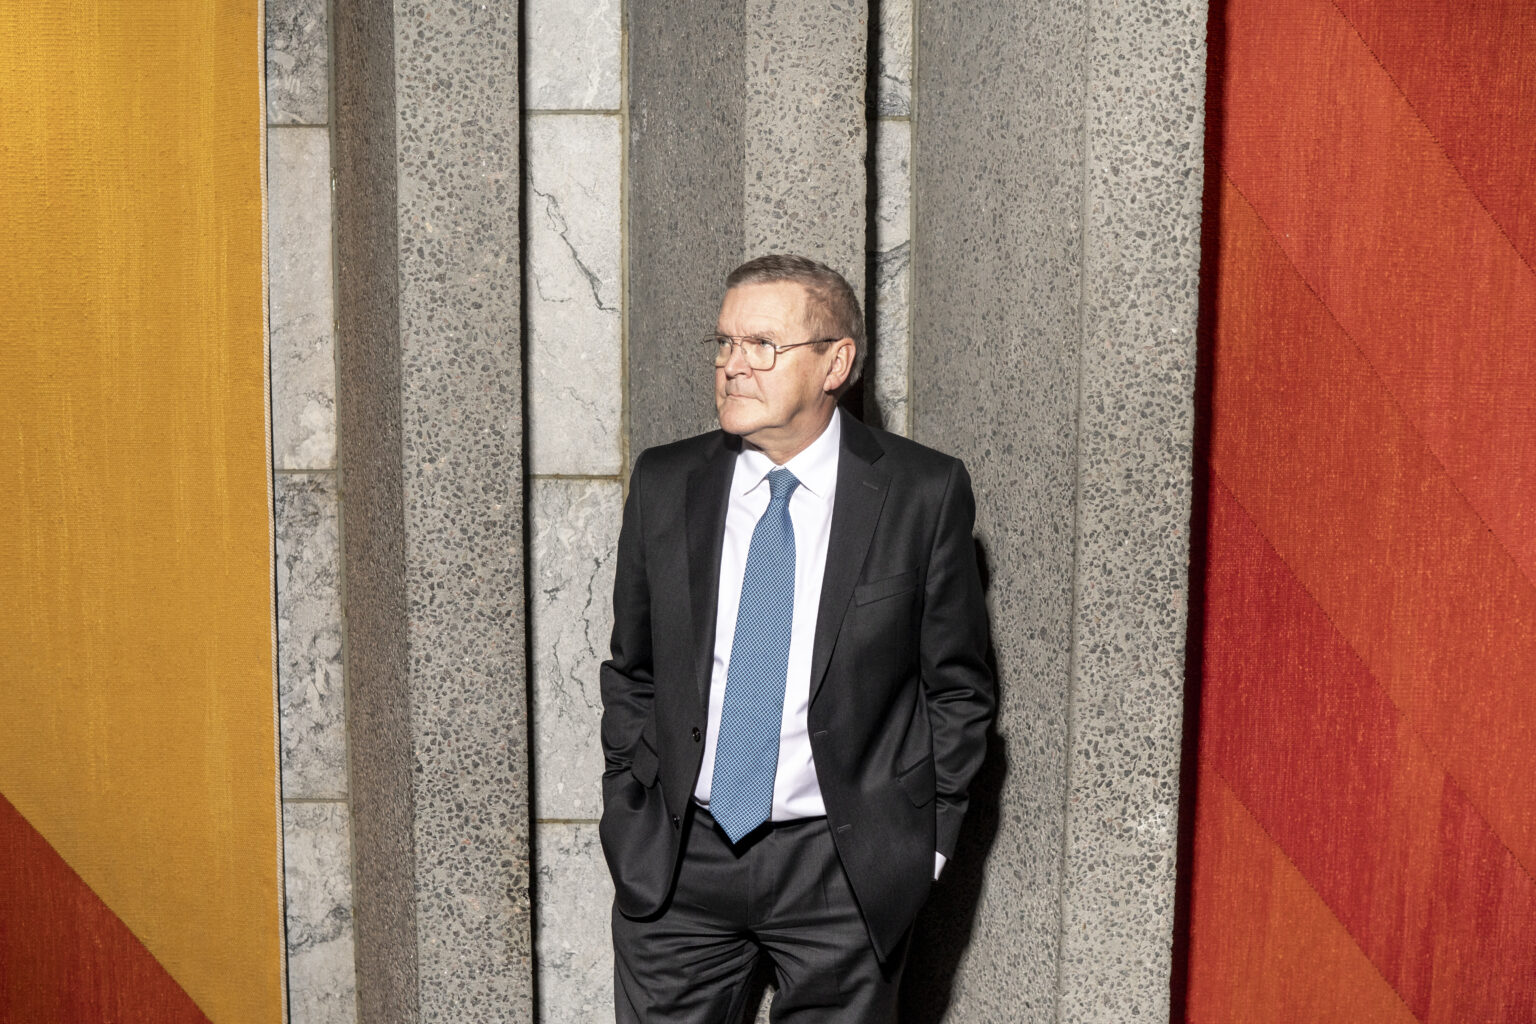 Lars Rohde-exit midt i historisk milliardtab i Nationalbanken